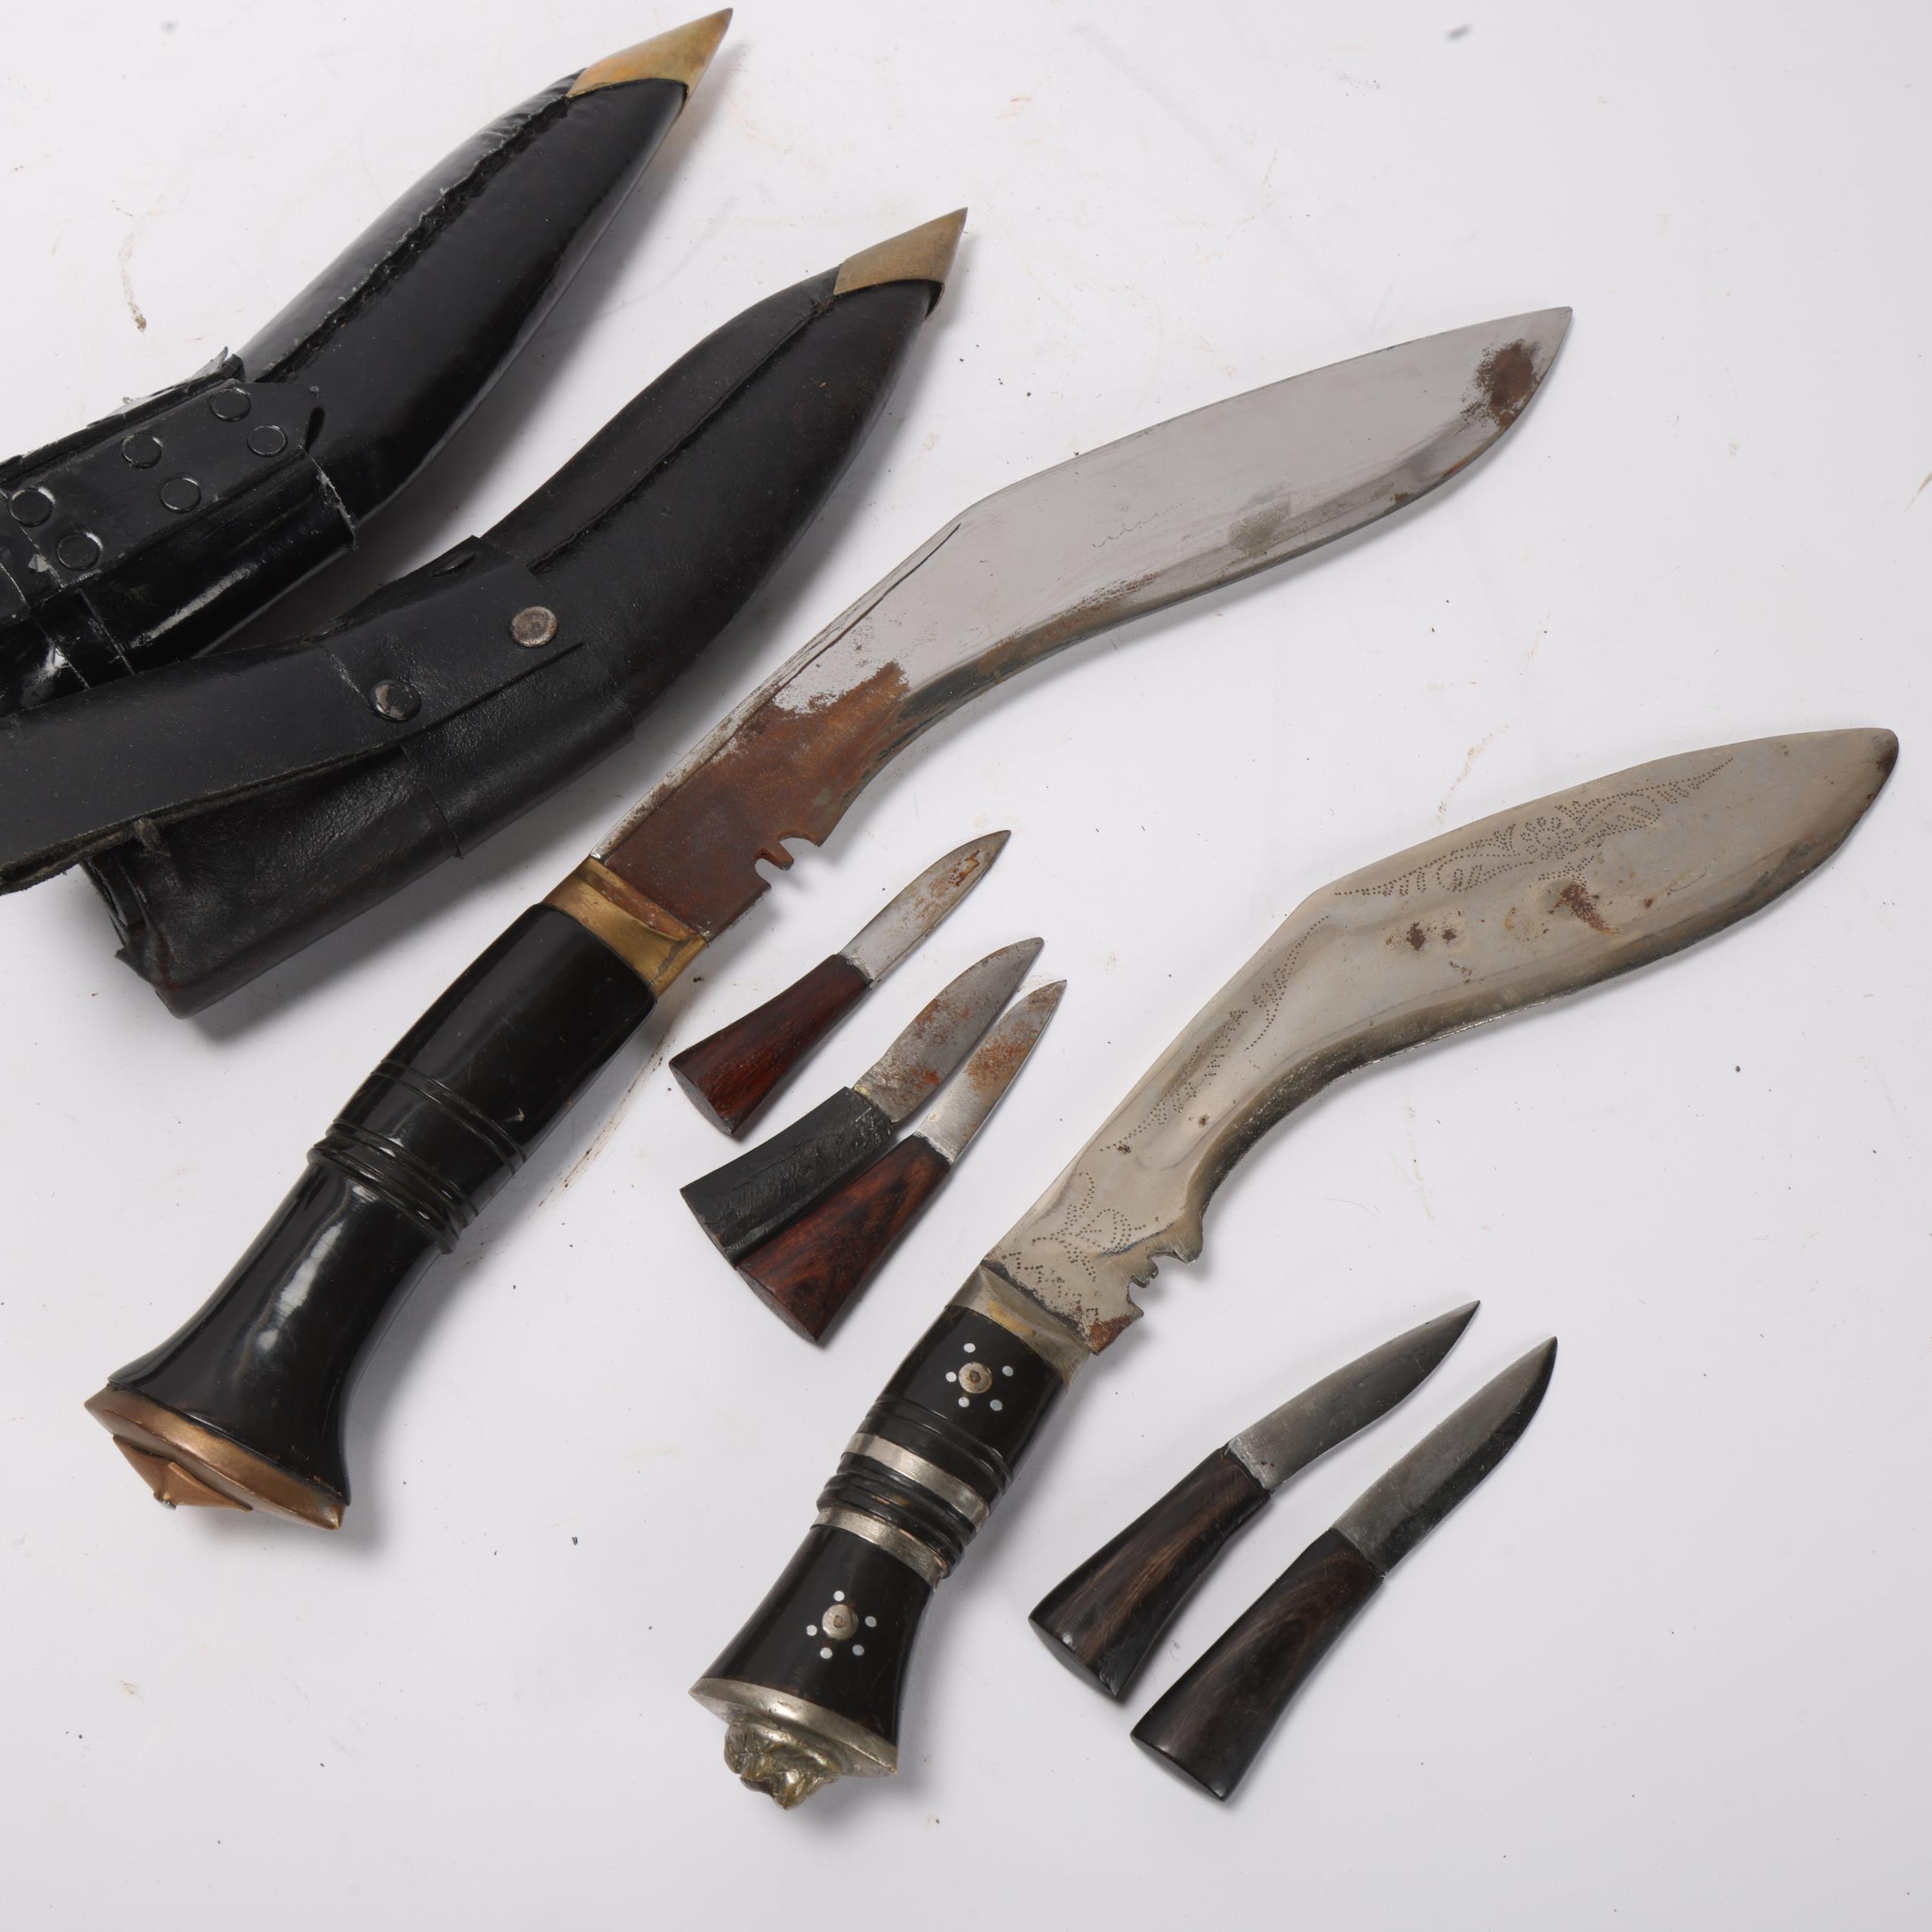 2 Gurkha kukri knives with leather scabbards - Image 2 of 3